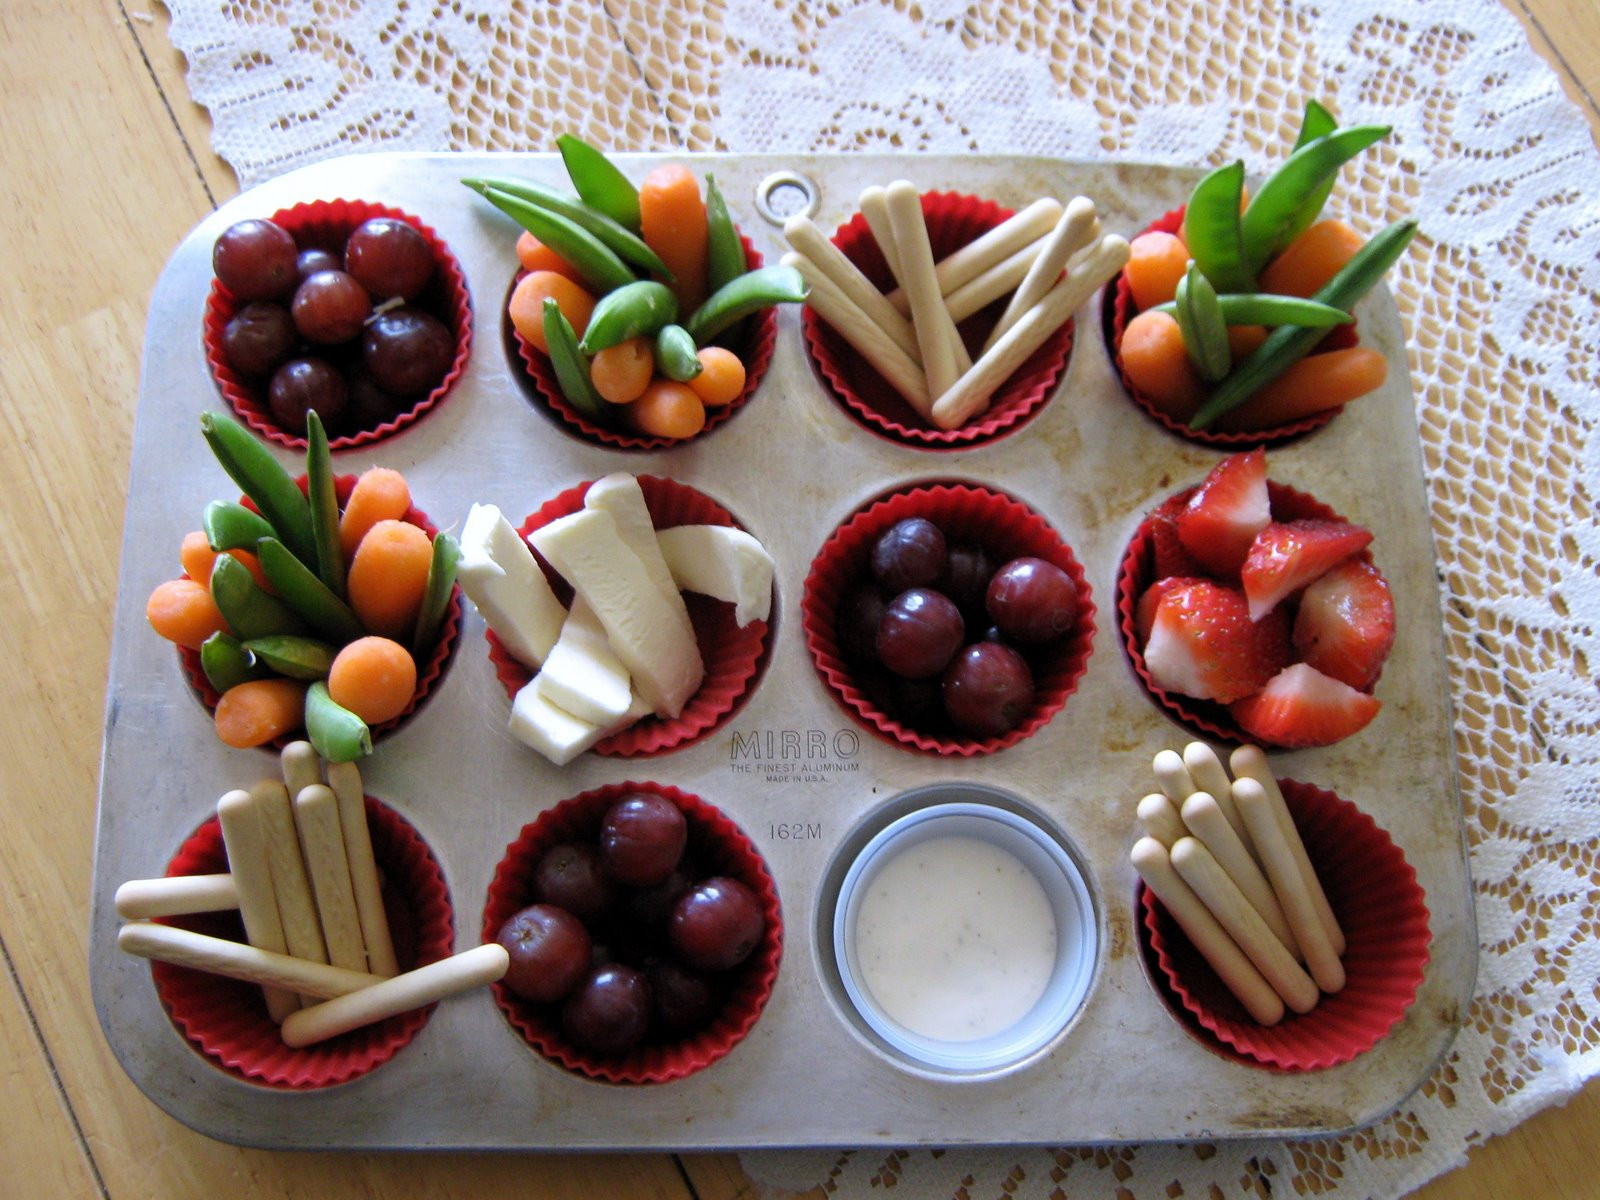 Healthy Snacks For Kids To Take To School
 Li l Buck s Creations Beautiful After School Snacks